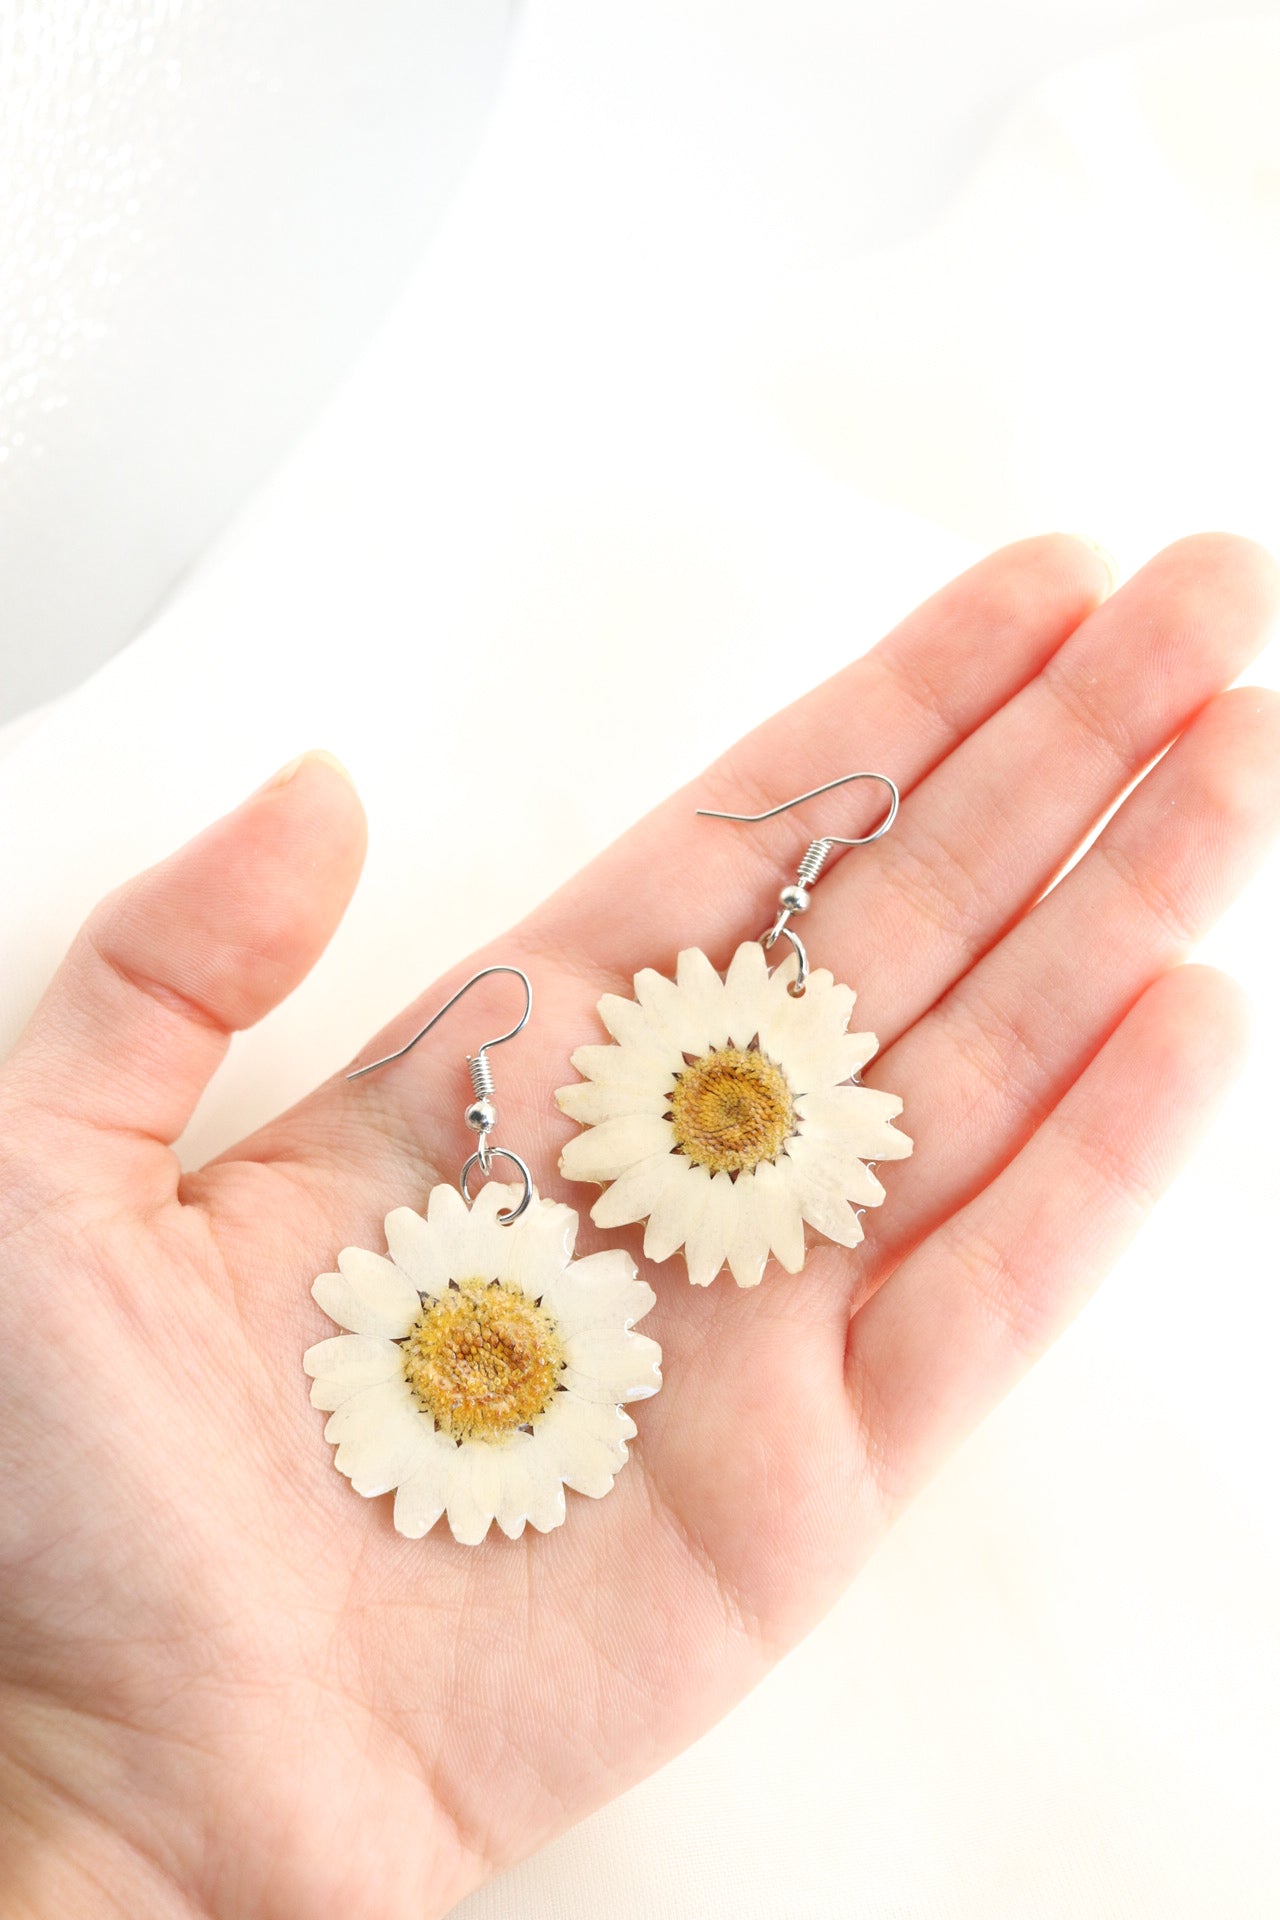 White Daisy Frameless Earrings Real Pressed Flower Clear Resin Floral Earrings Botanical Nature Jewelry White Wildflower Earrings